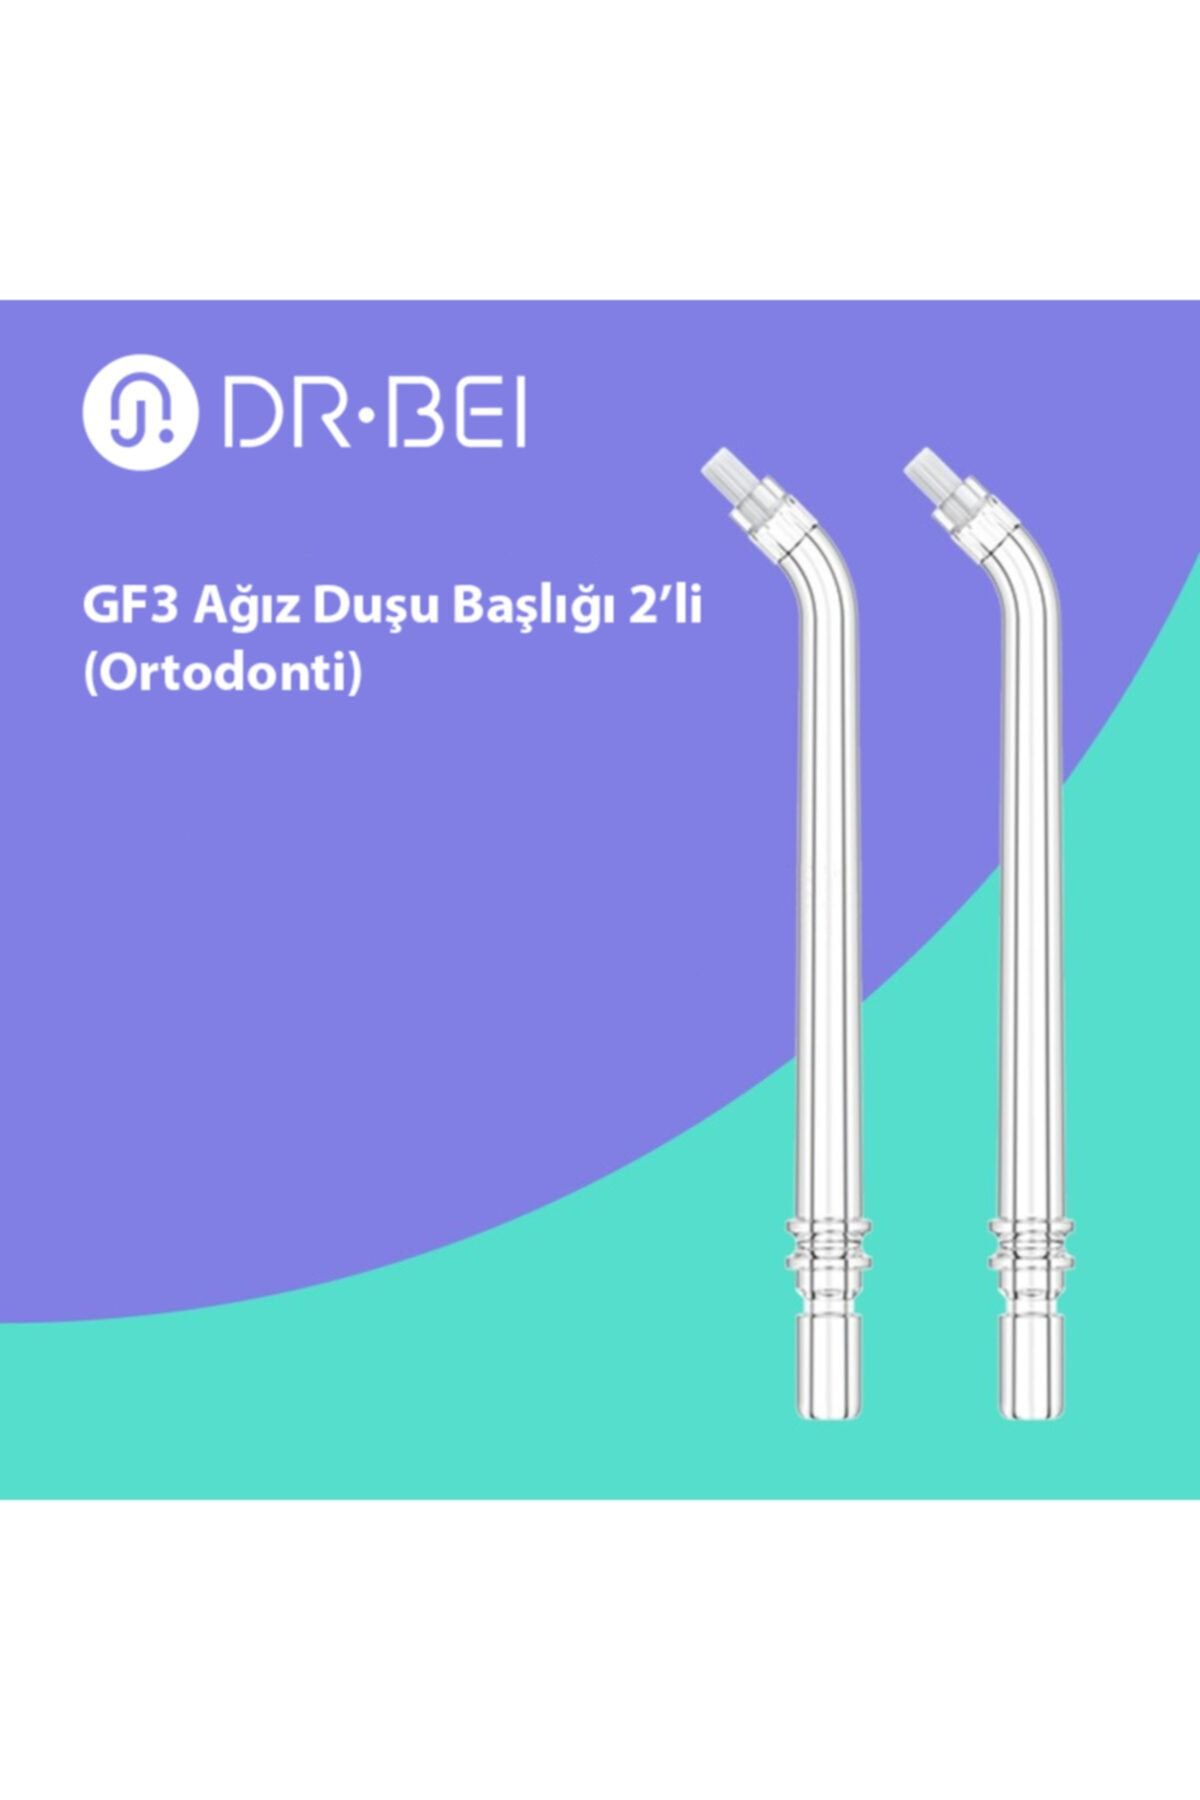 Dr.Bei Gf3 Ağız Duşu Başlığı 2'li (ortodonti)